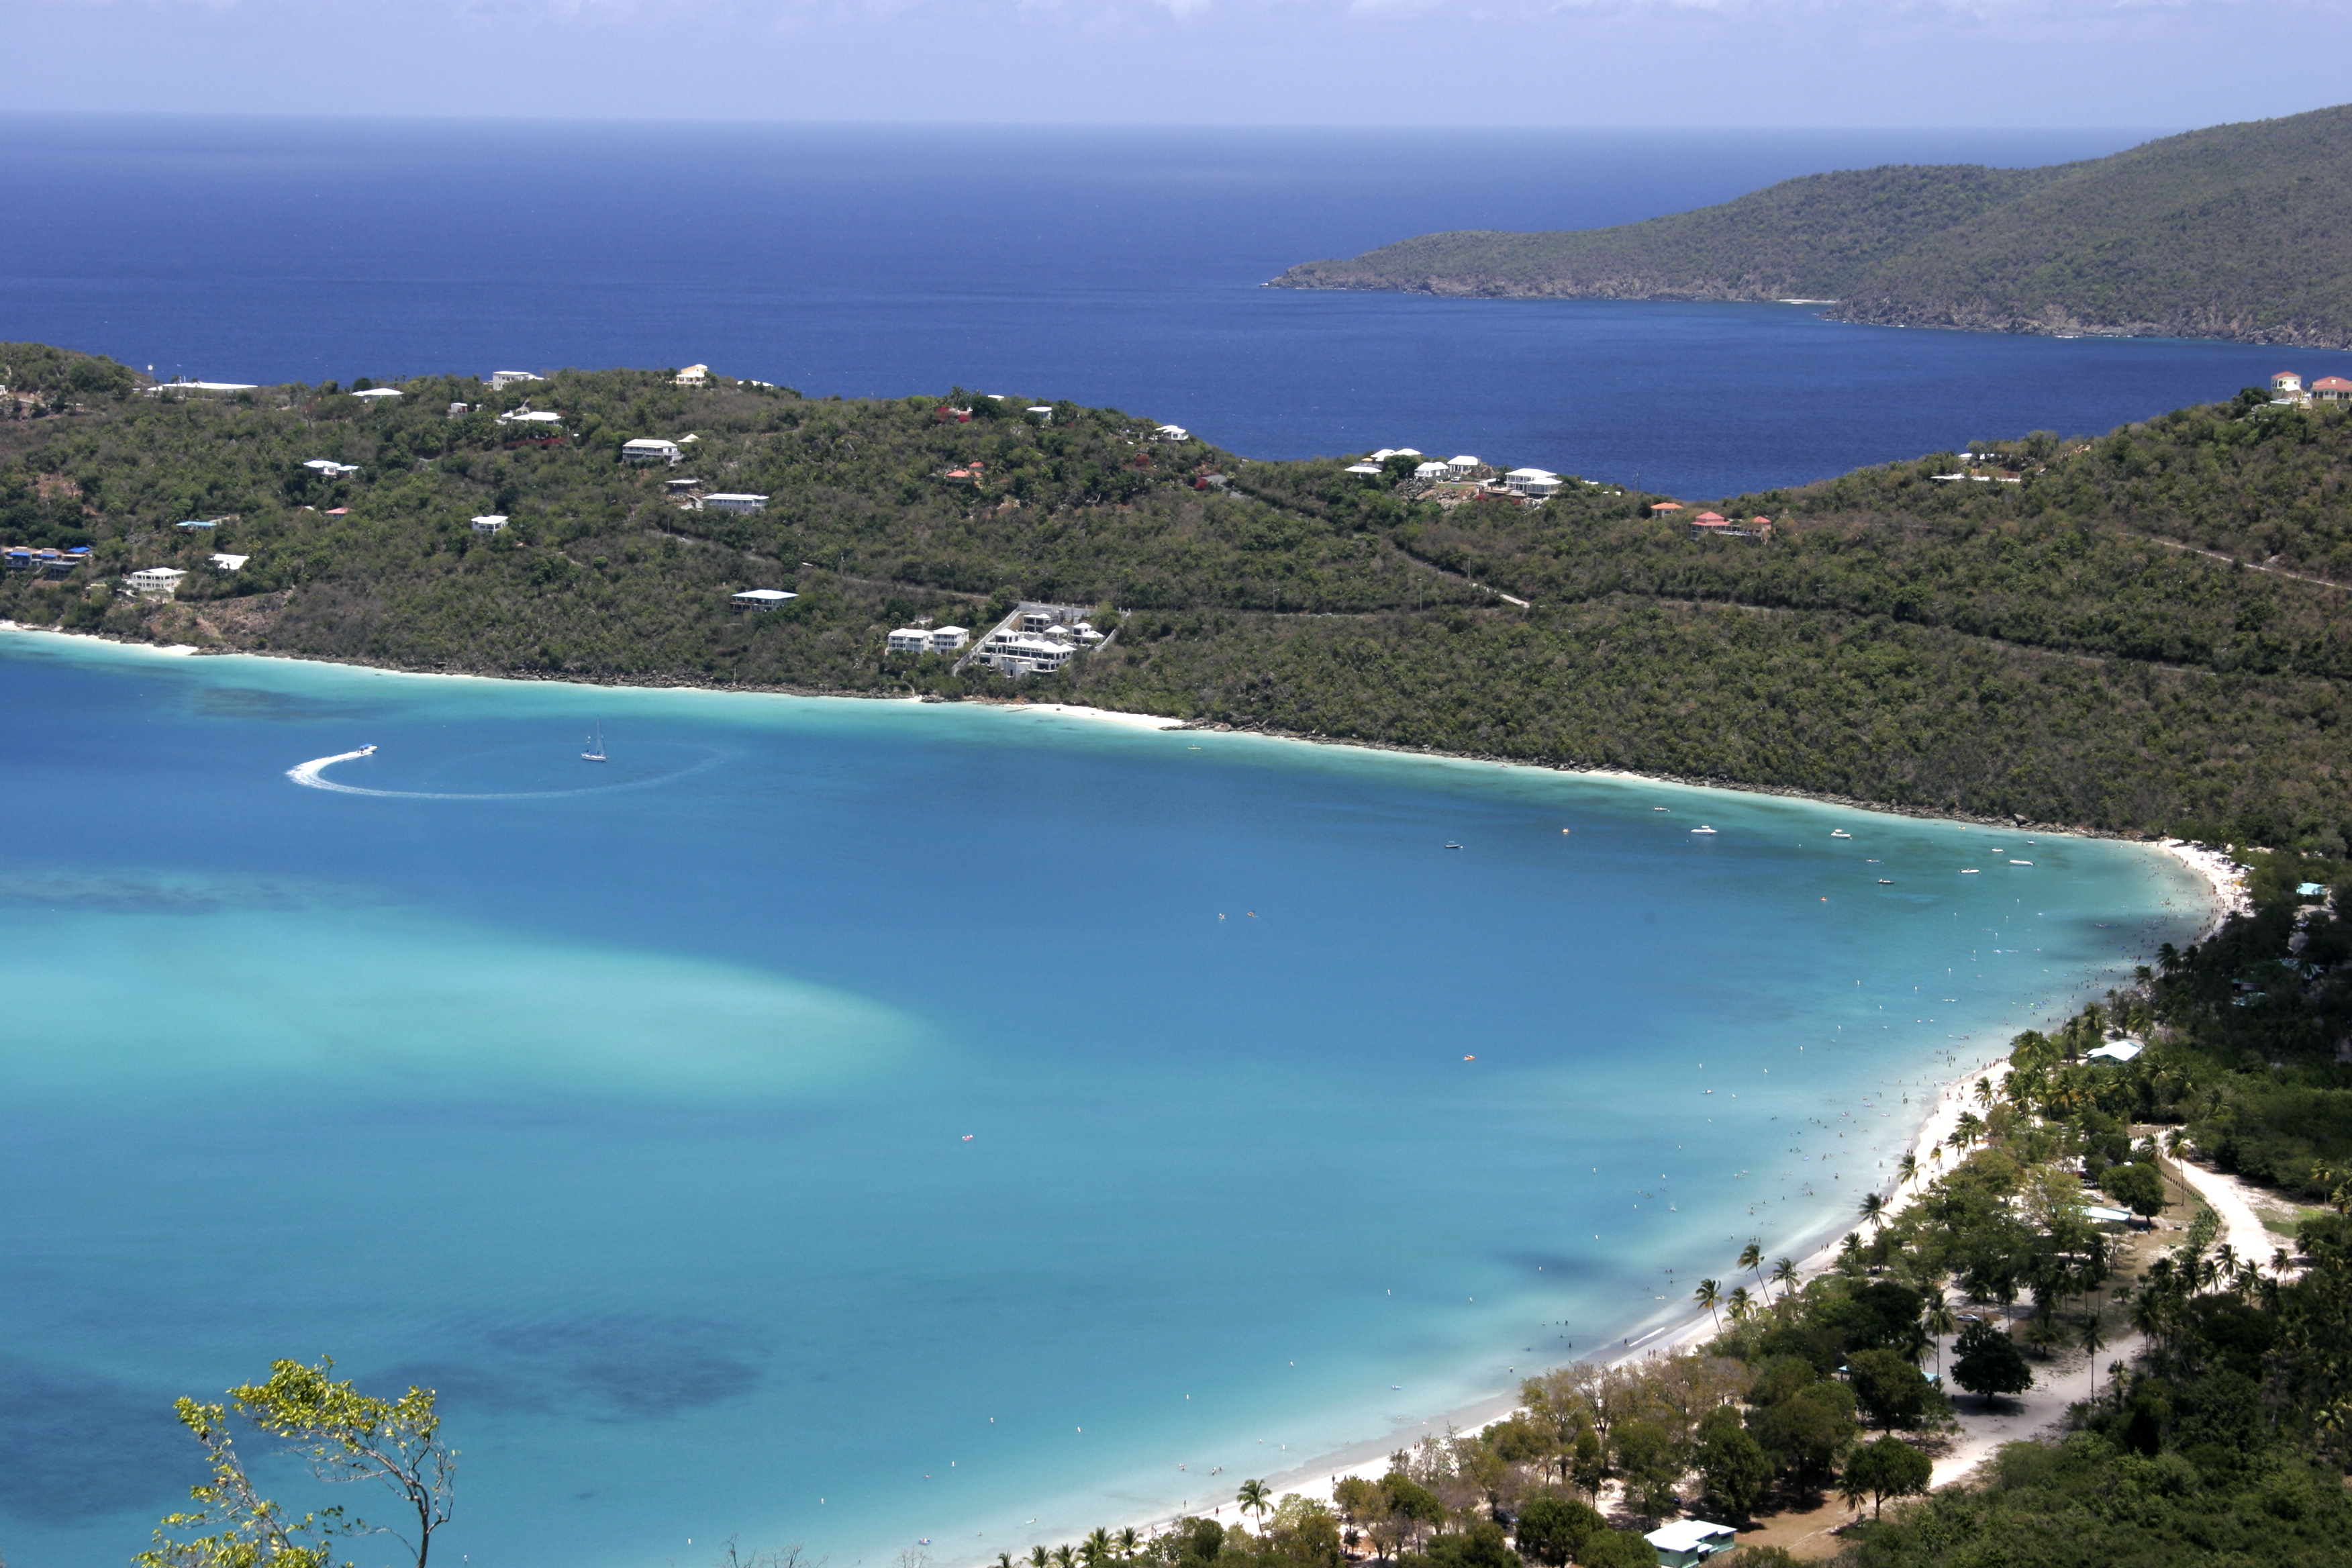 Megans Bay and Beach, U.S. Virgin Islands. Getty Images (Jeff Greenberg&mdash;UIG via Getty Images)